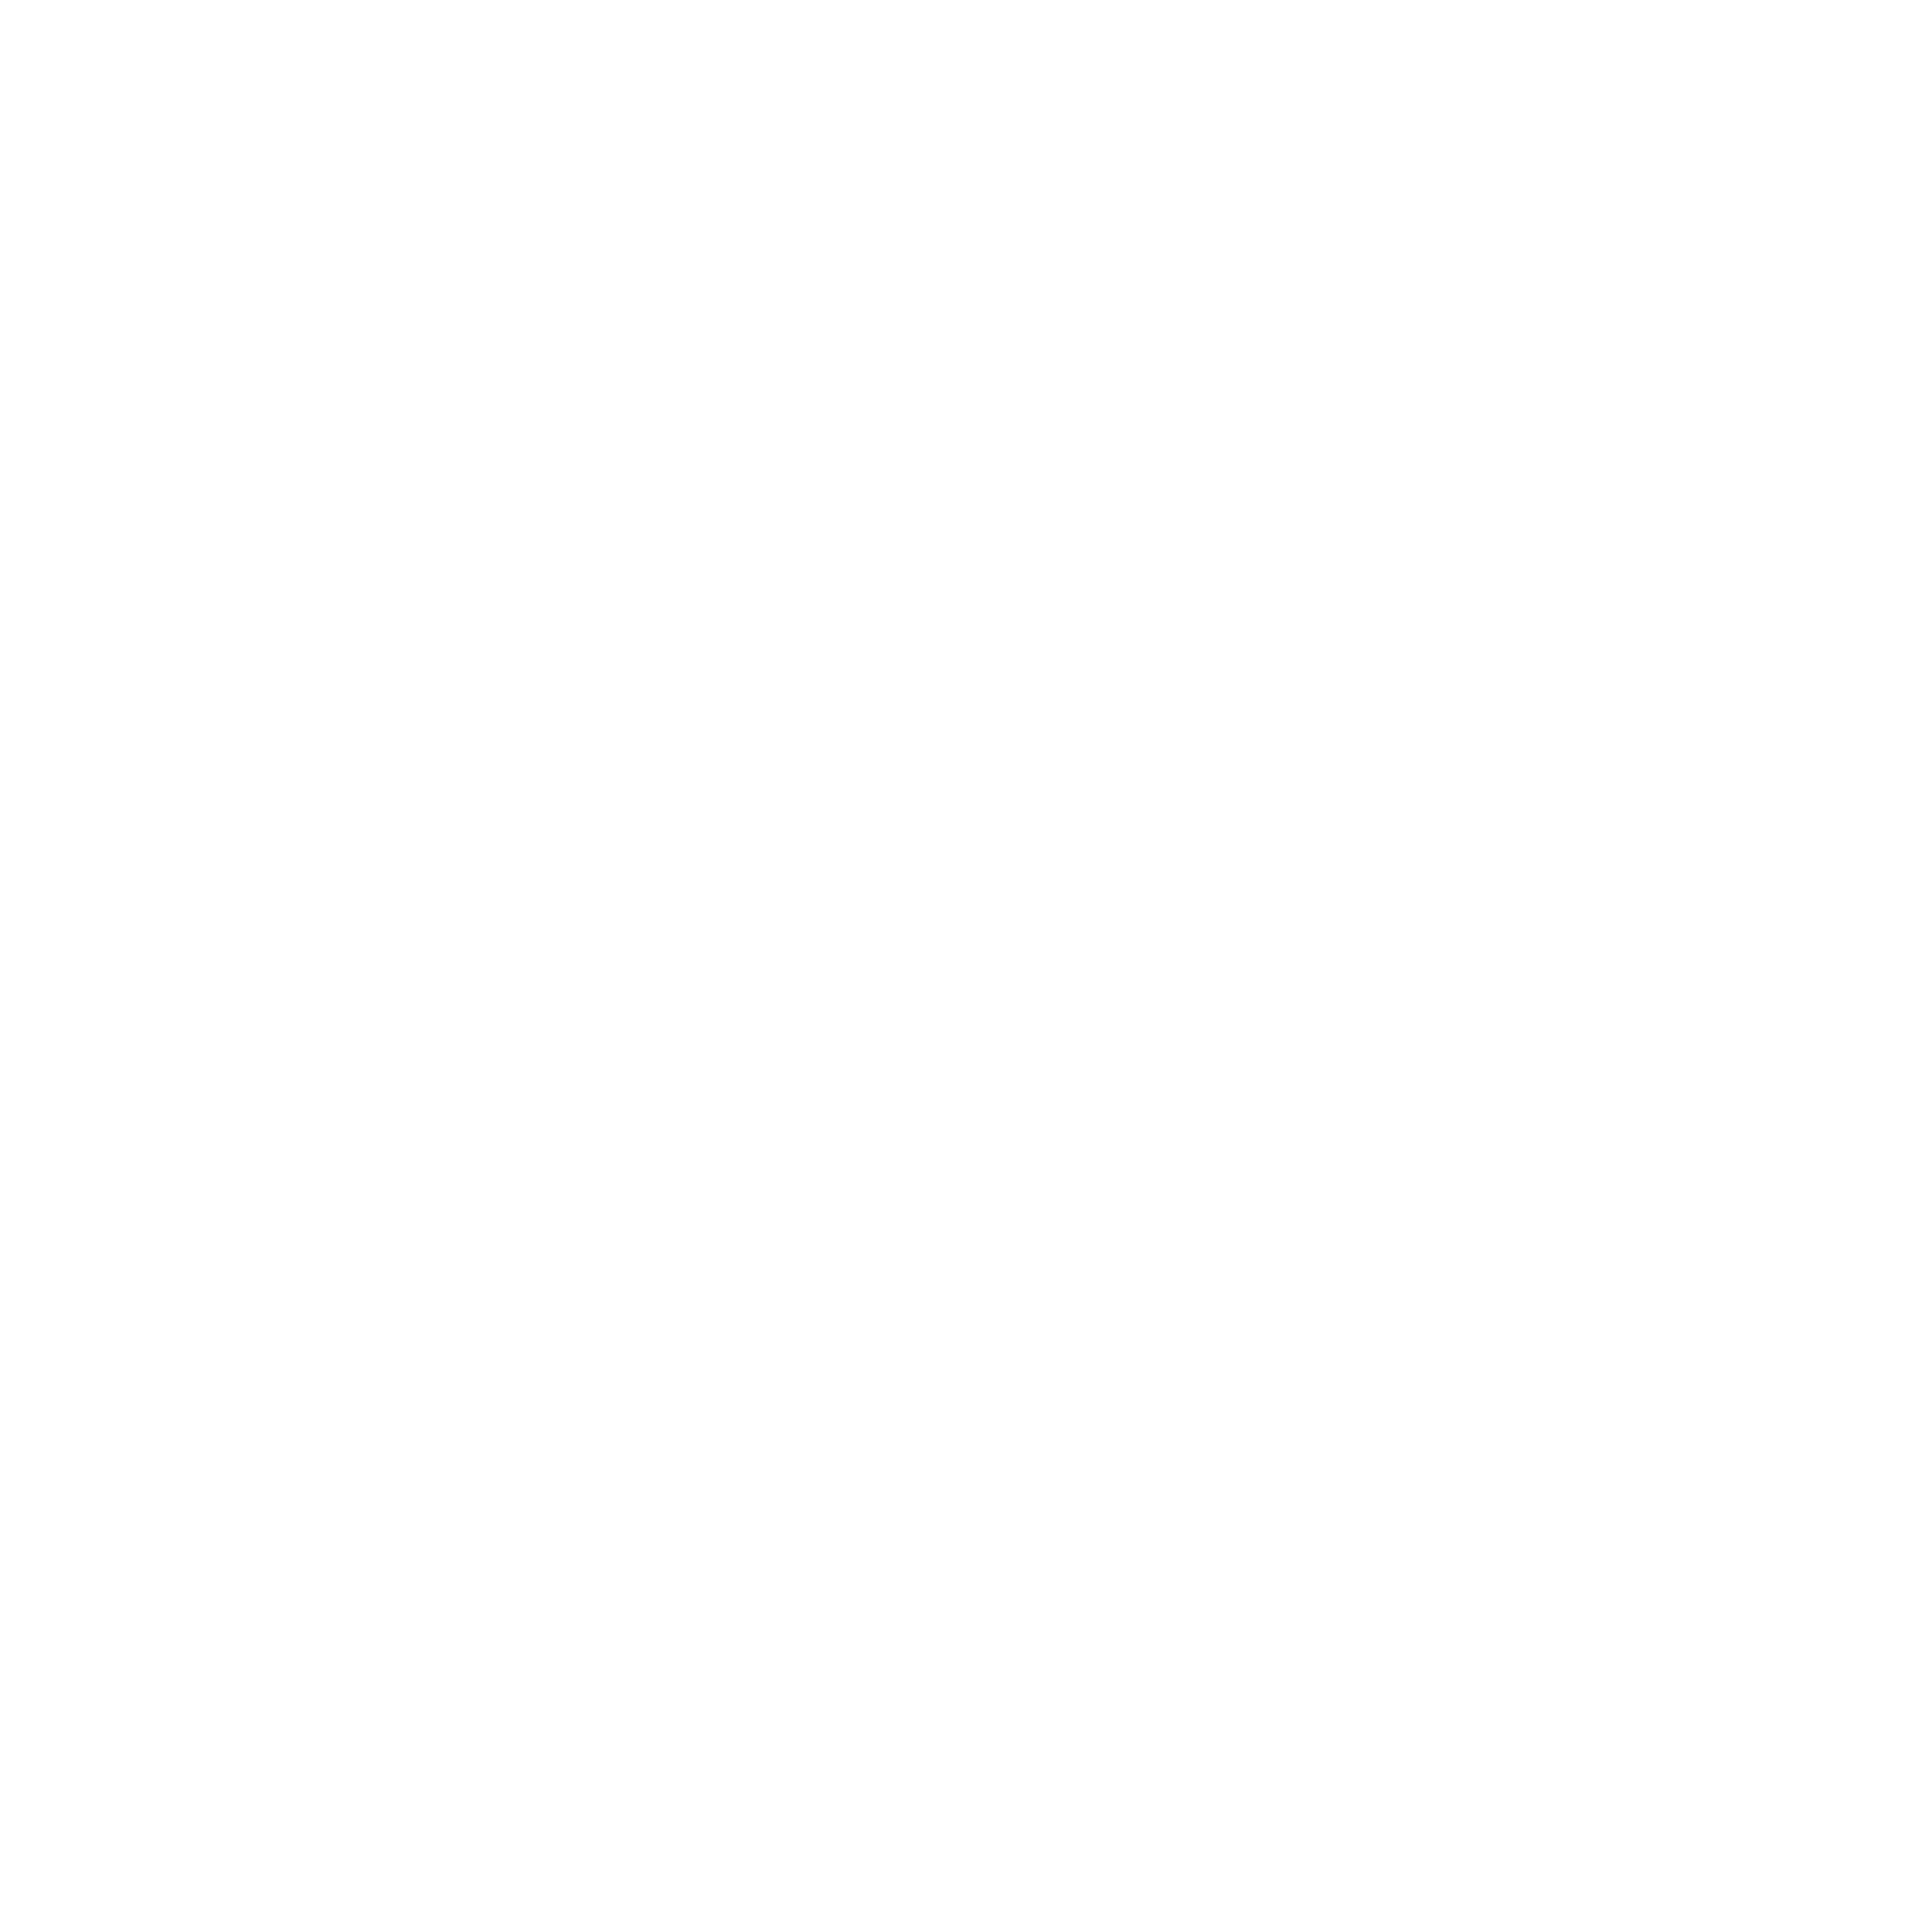 The FBI Church 